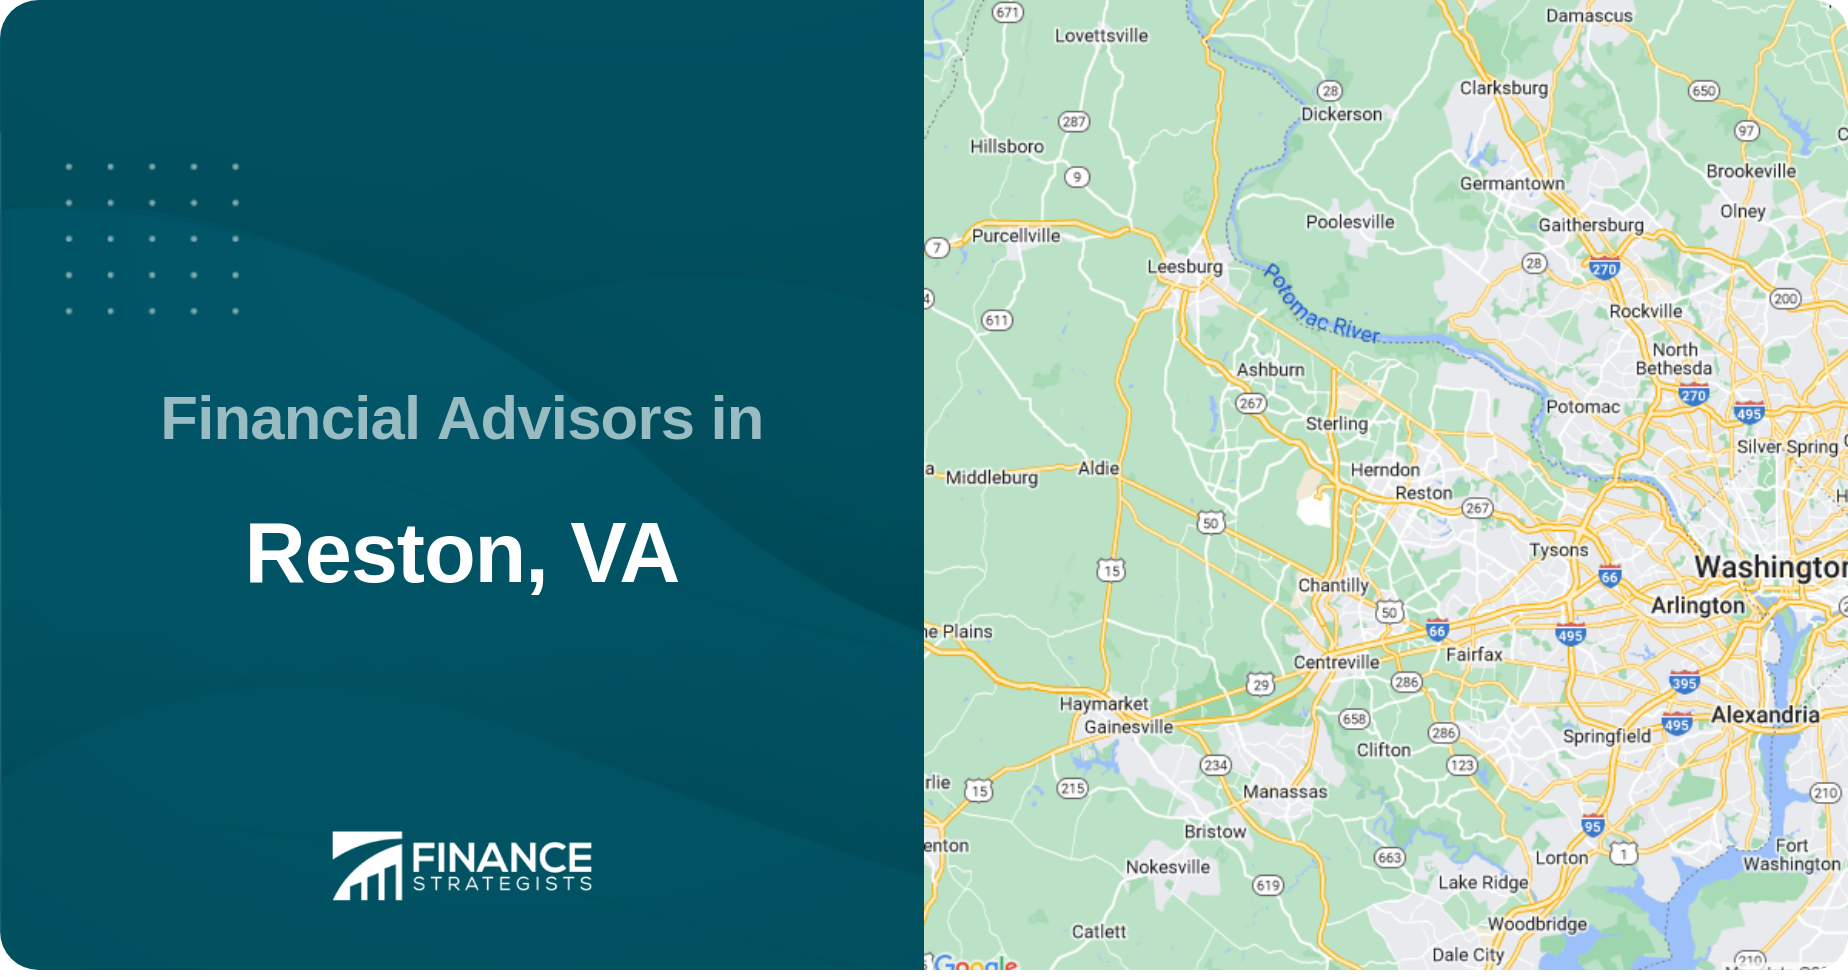 Financial Advisors in Reston, VA